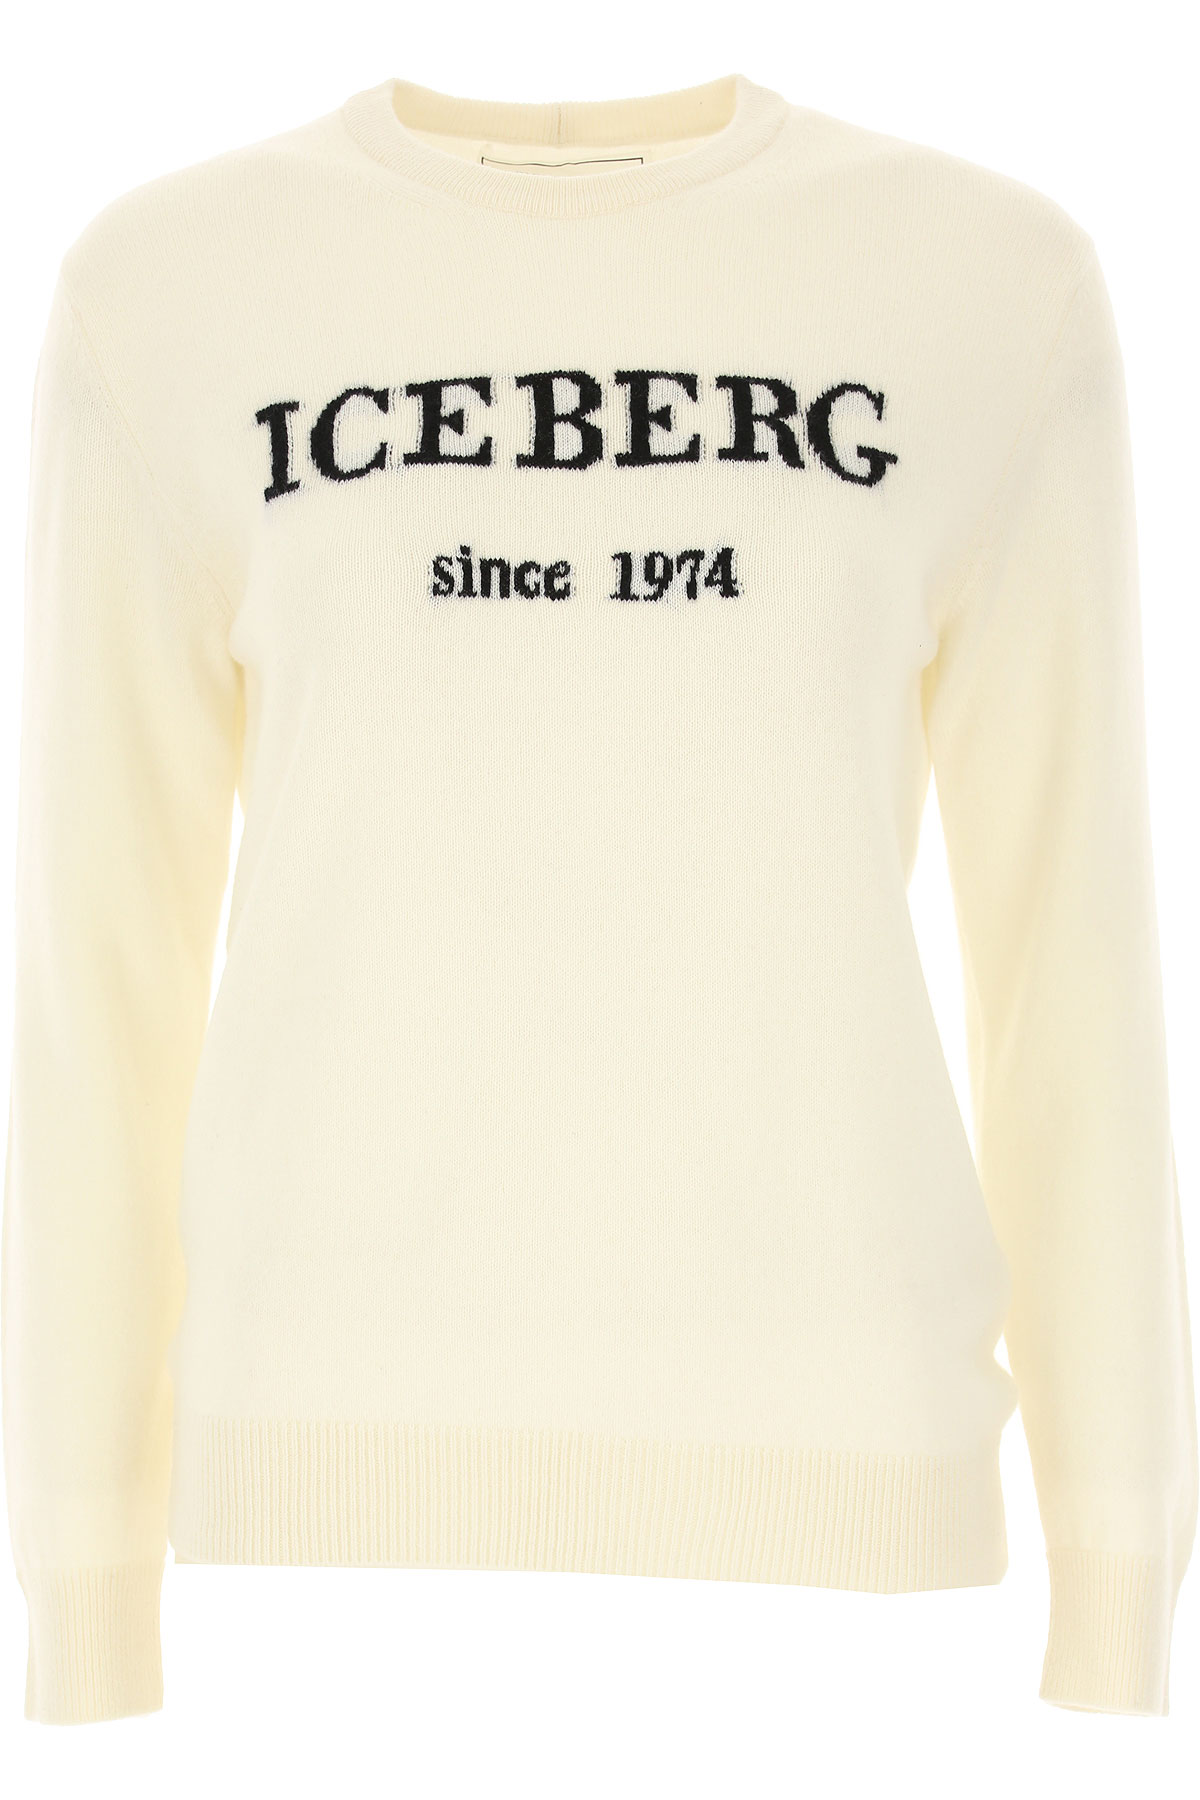 iceberg clothing brand